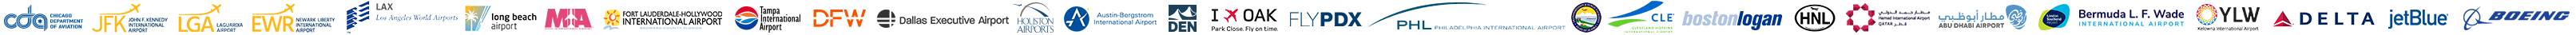  Client Logos